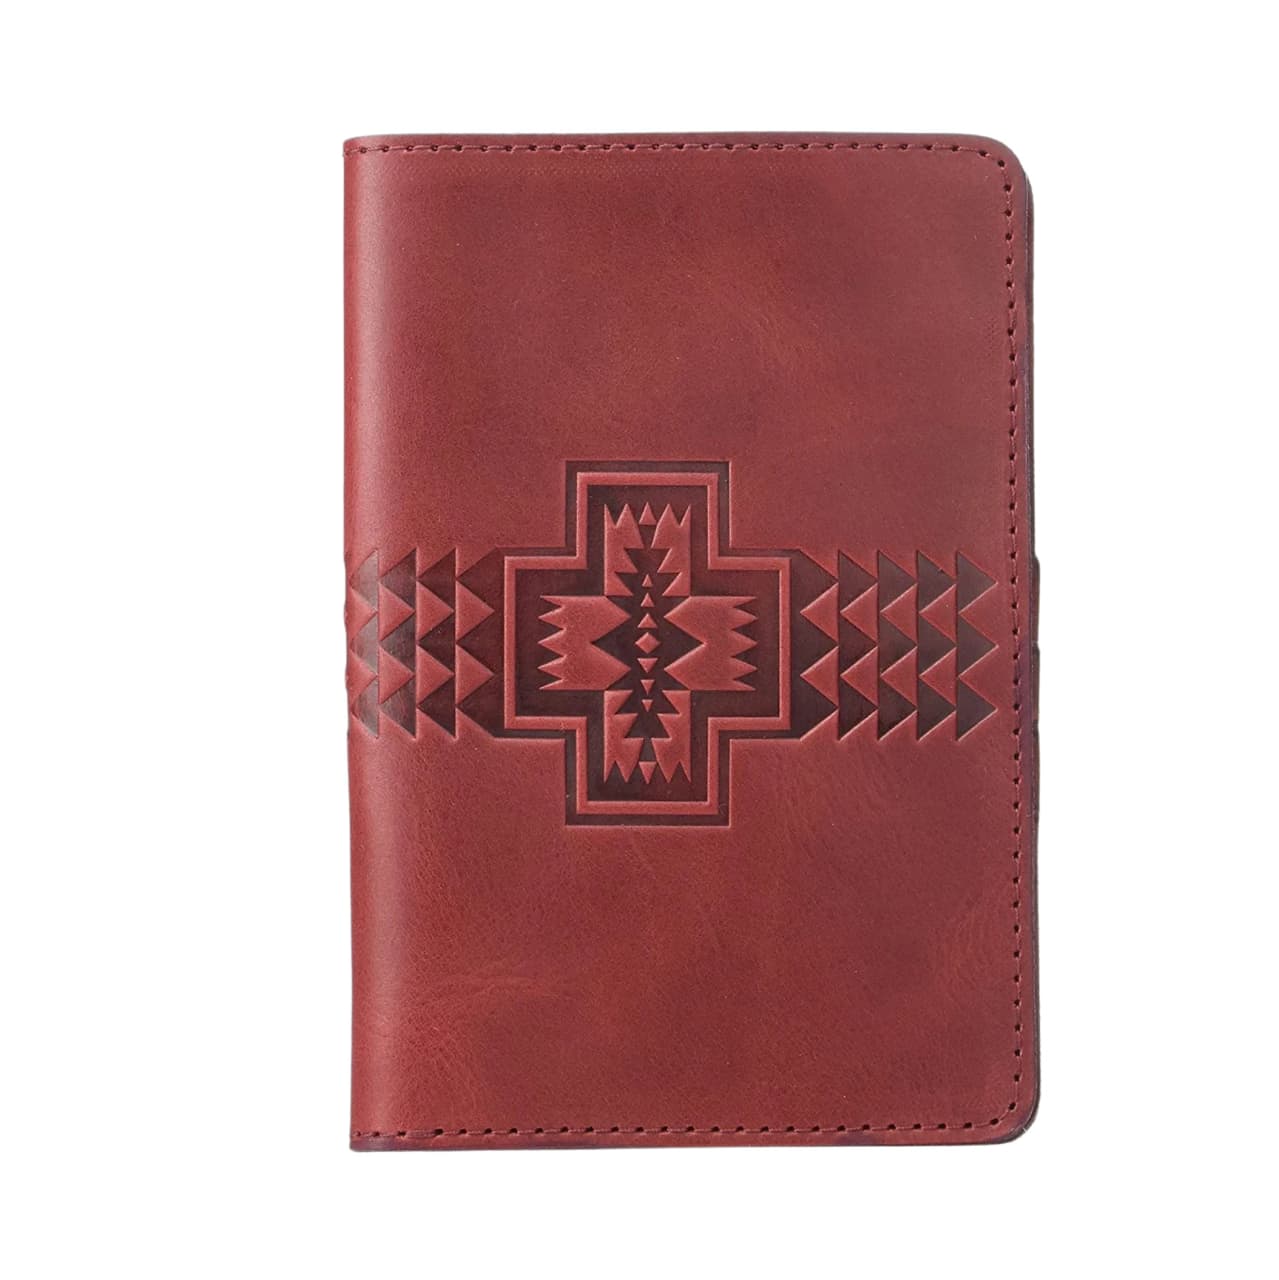 Leather embossed passport holder